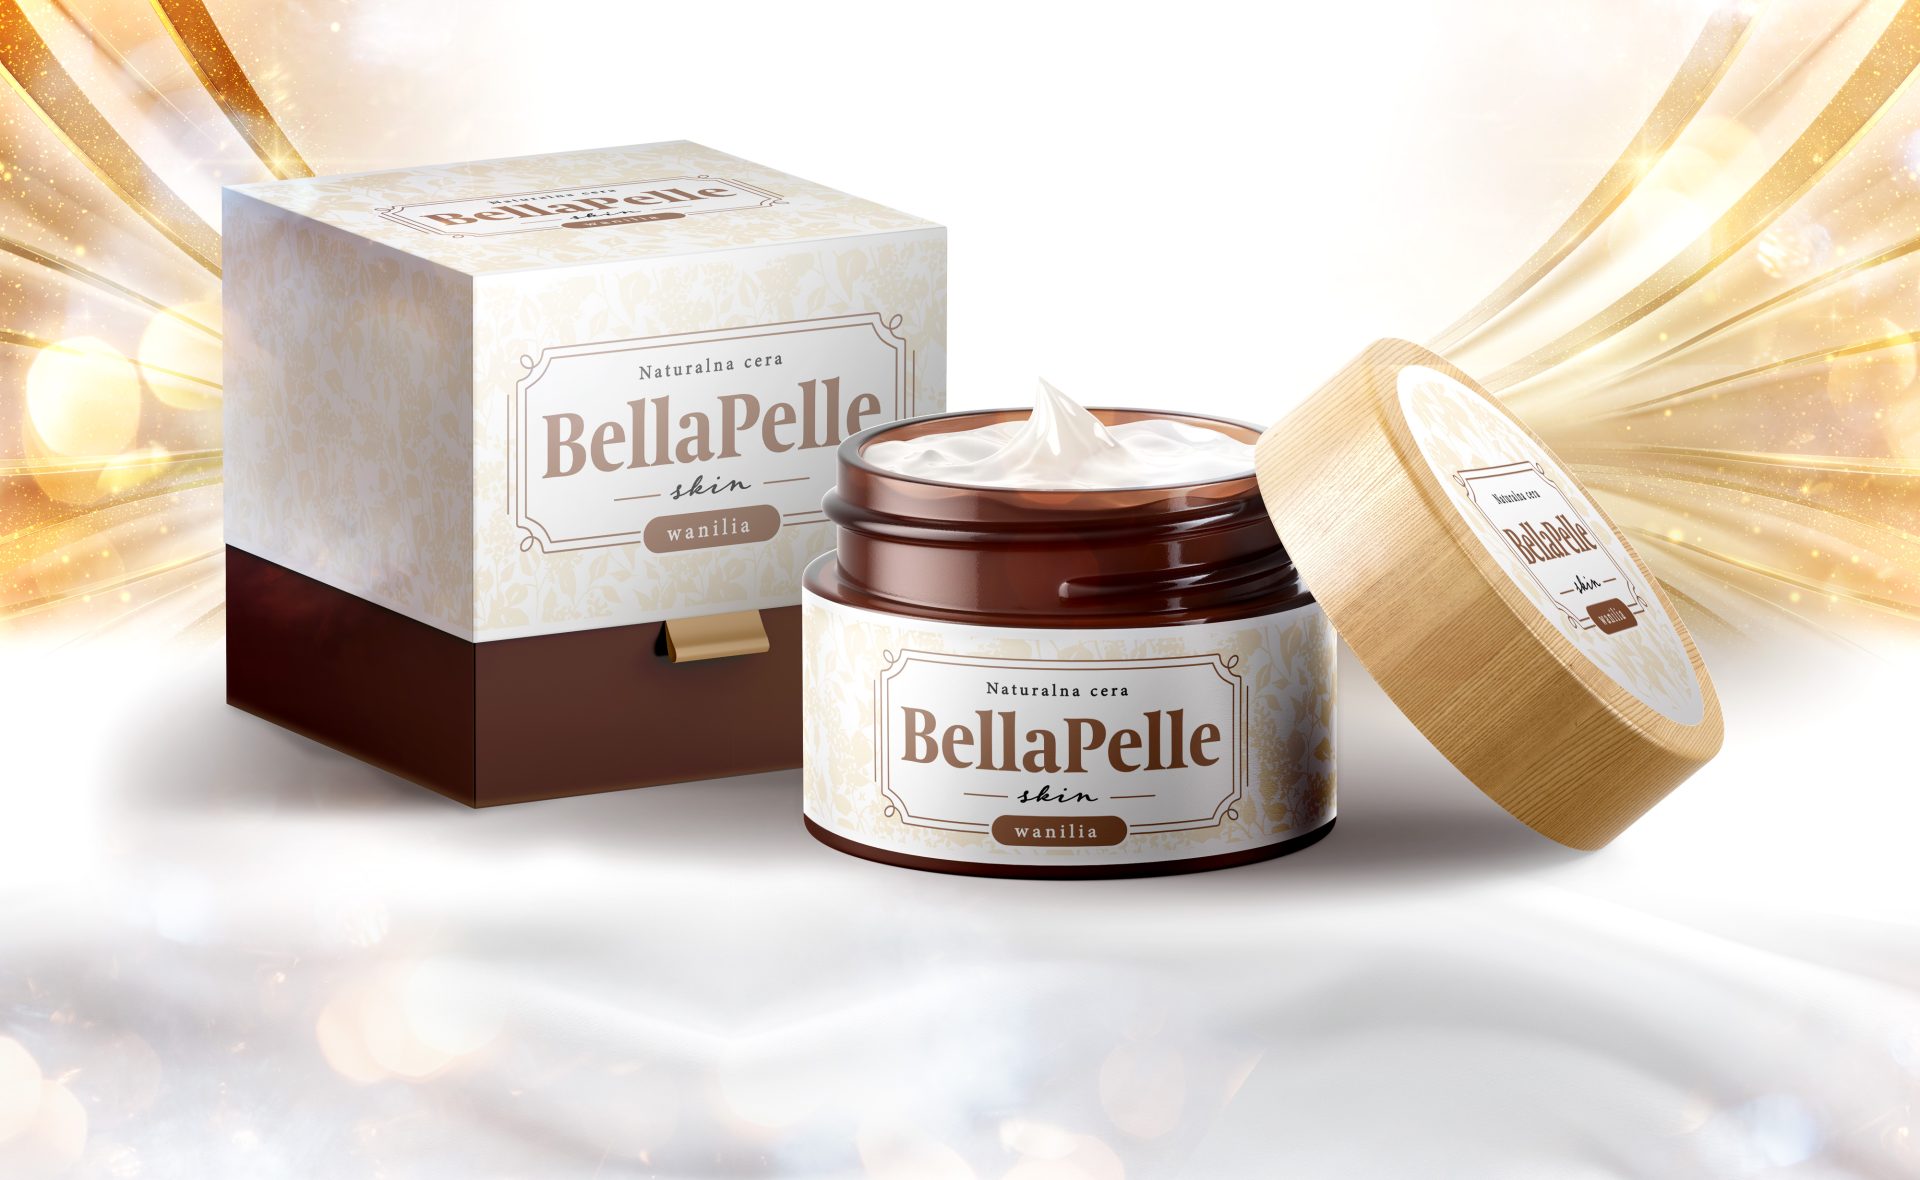 Bella Pelle – An original fragrance in a special edition.